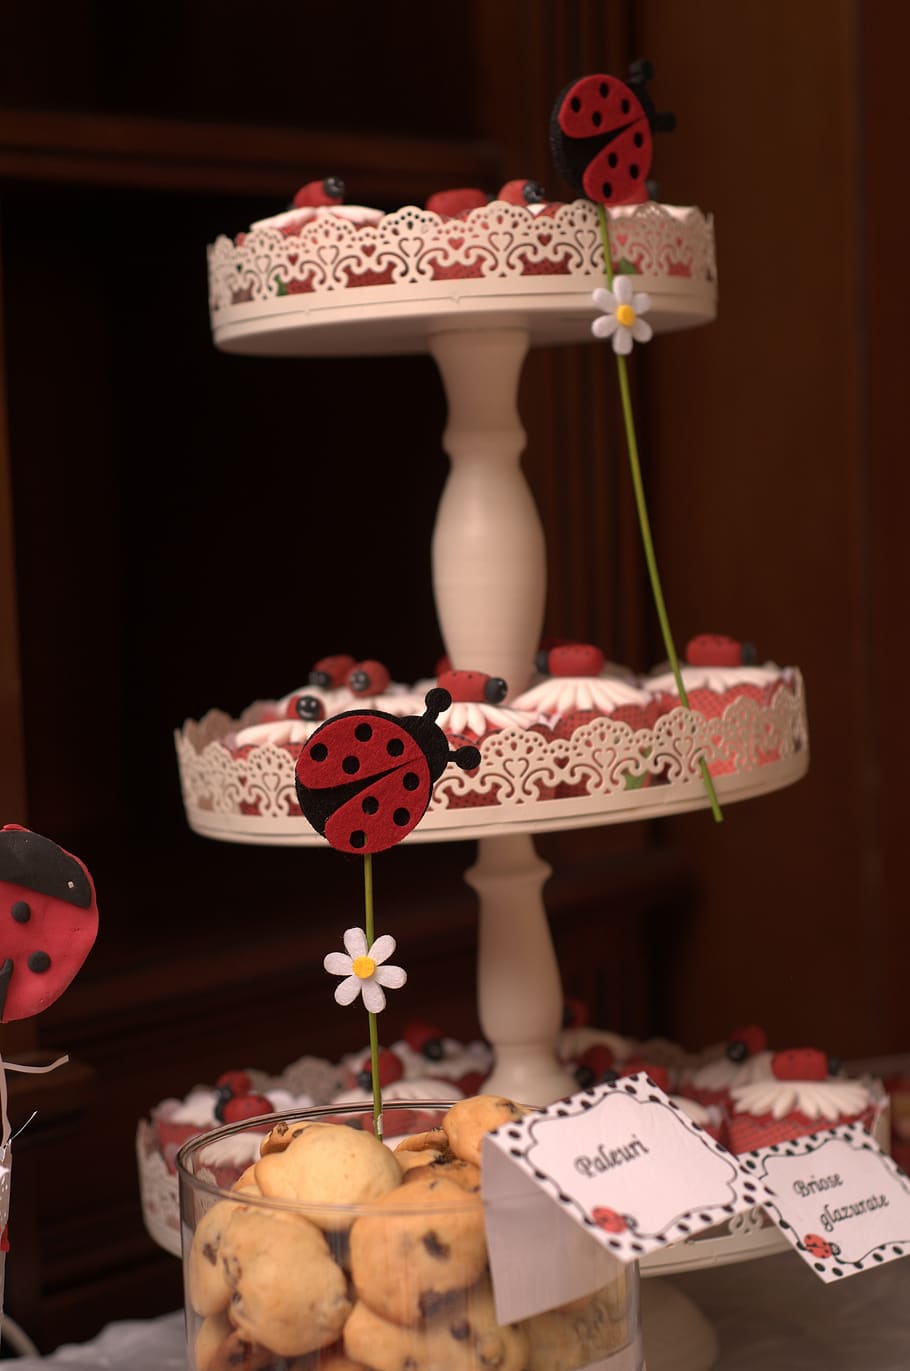 decoration, cake, food, celebration, candle, christmas, table, candy bar, lady bug, red